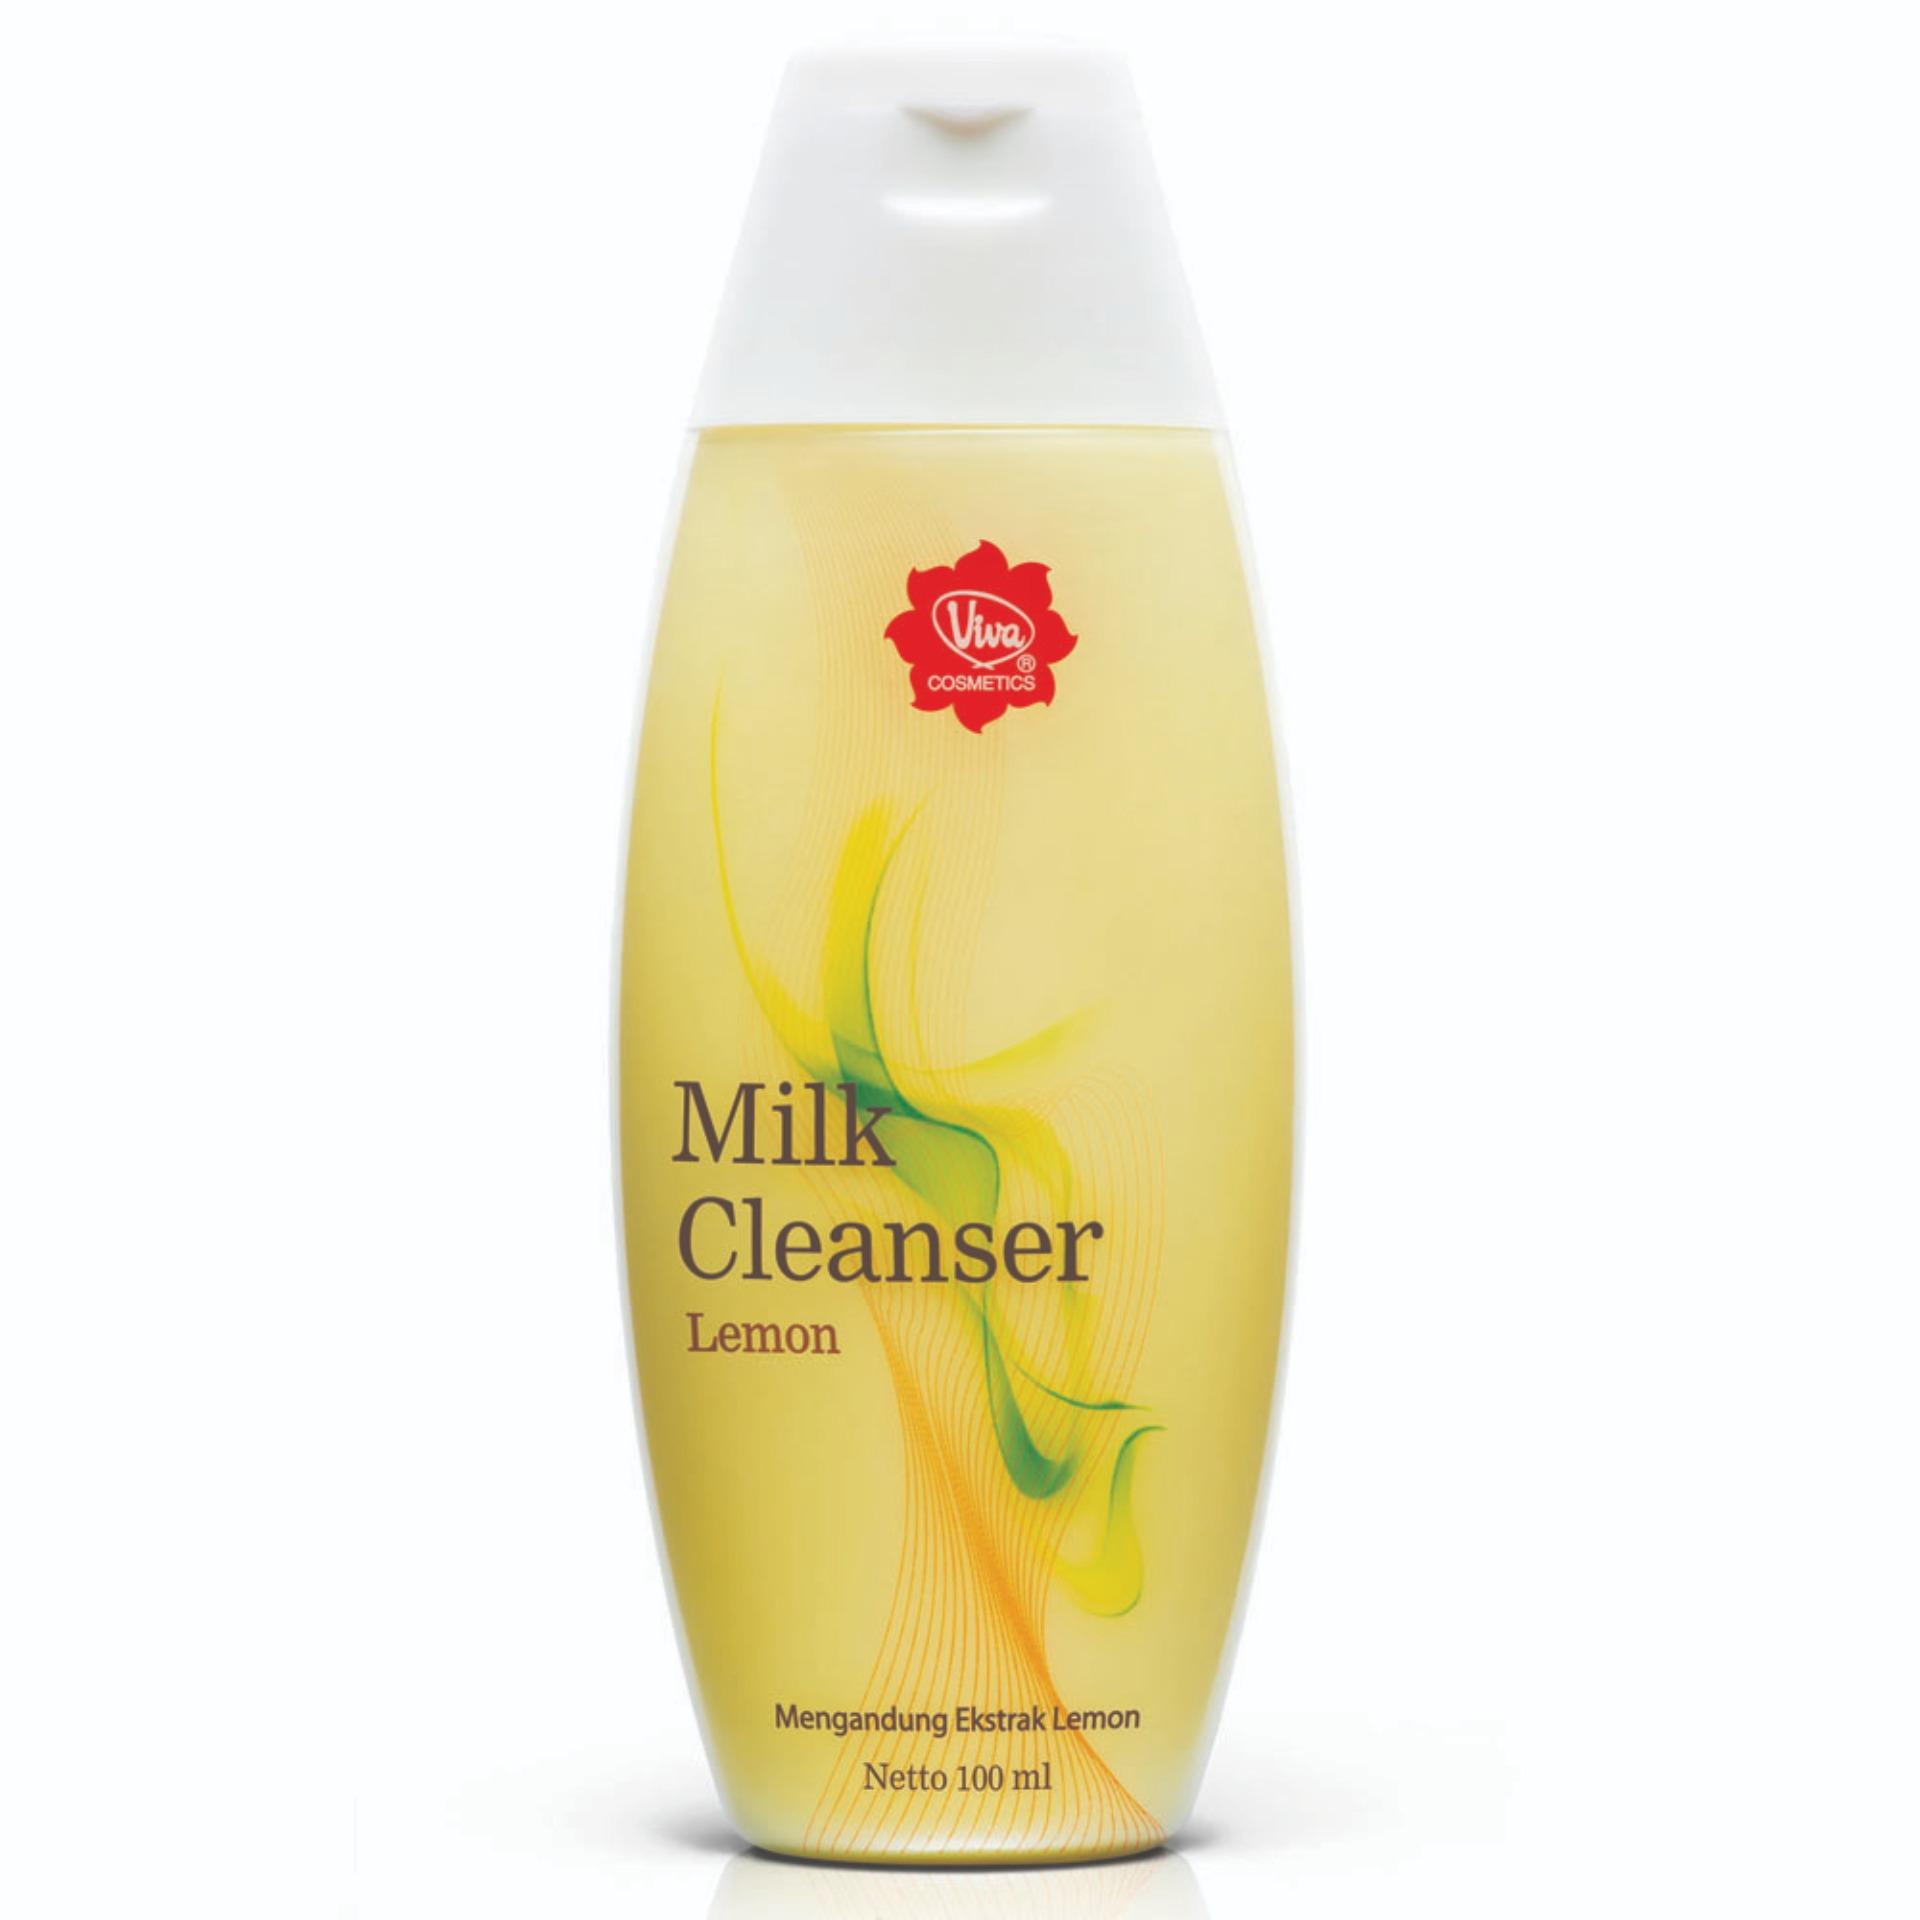 Milk clean. Milk Cleanser. Premier косметика Milk Cleanser. Clensinc mi LK Jojoba Oil Vitamin b6 Cermanski krem.